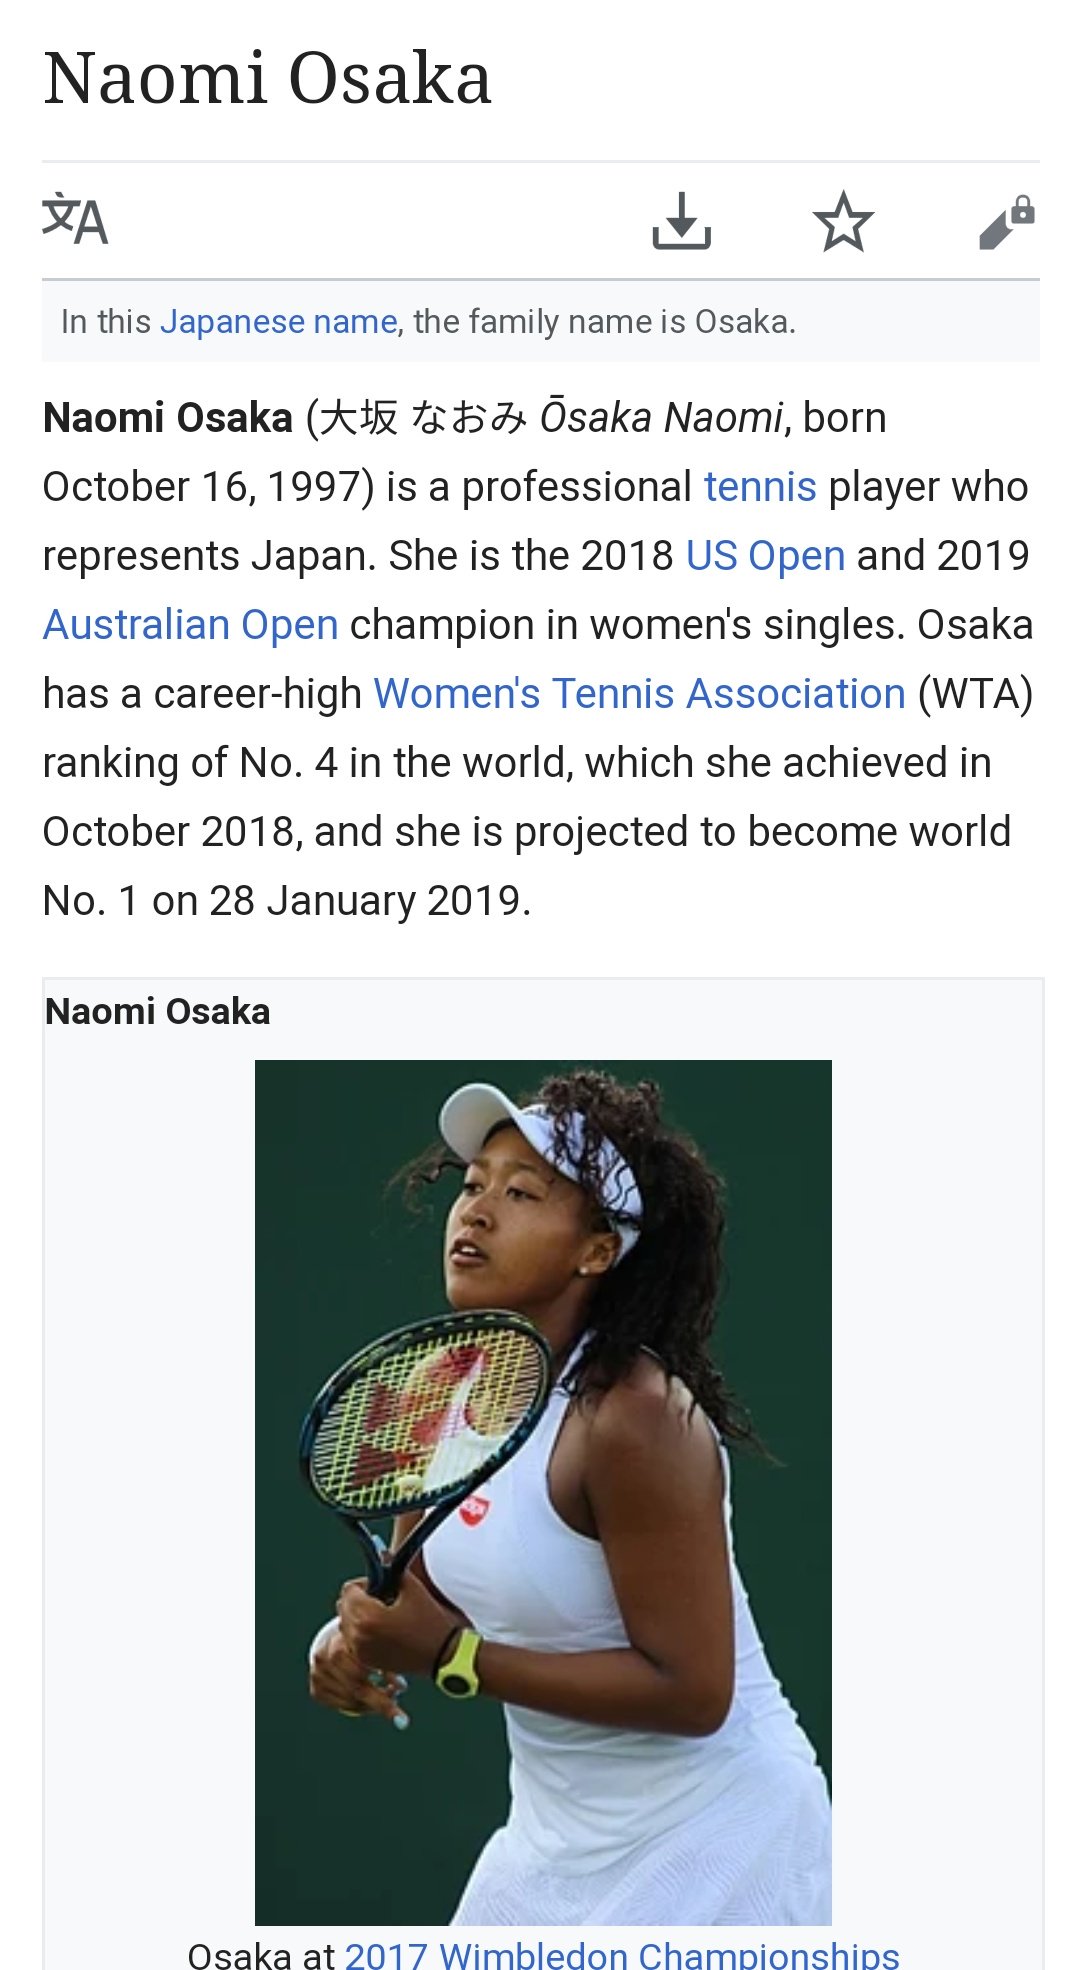 🙅🏾‍♀️🌸 RM & Archive 🐝🧈 #DonT #Butter on "Naomi Osaka (大坂 なおみ): 2018 US Open, 2019 Australian Open champion in women's singles. Has career-high Women's Tennis Association (WTA) ranking